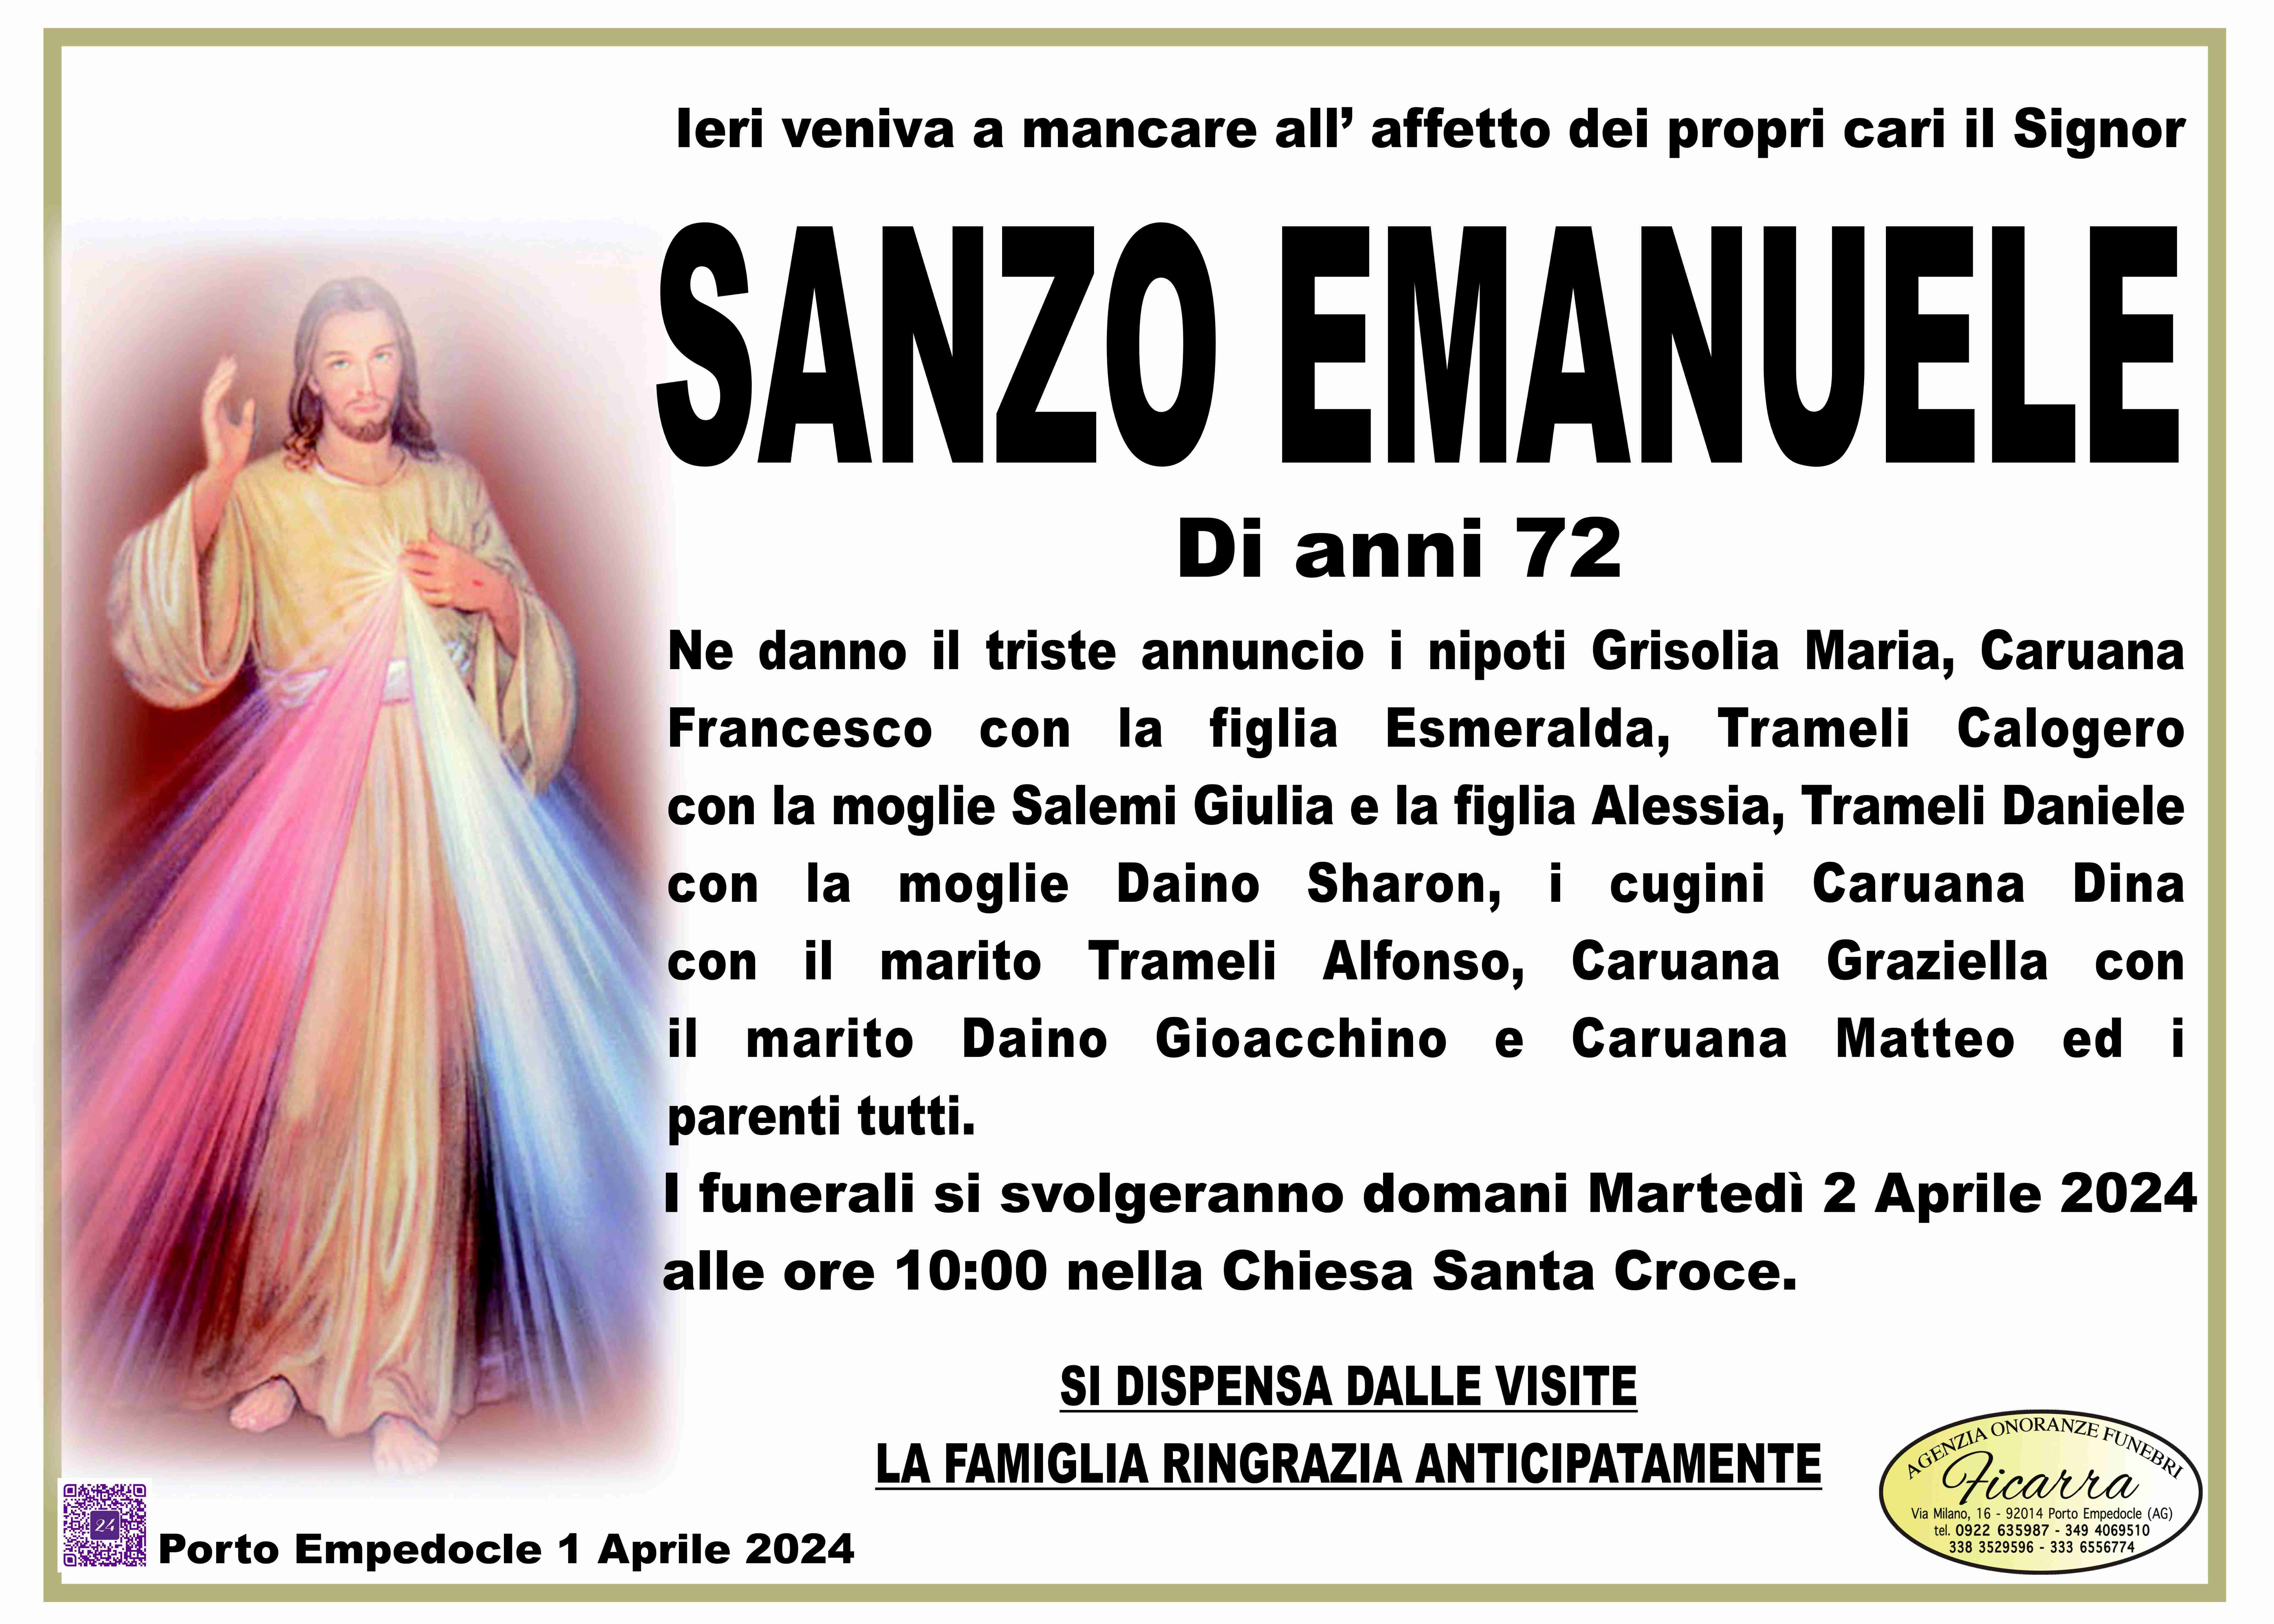 Emanuele Sanzo